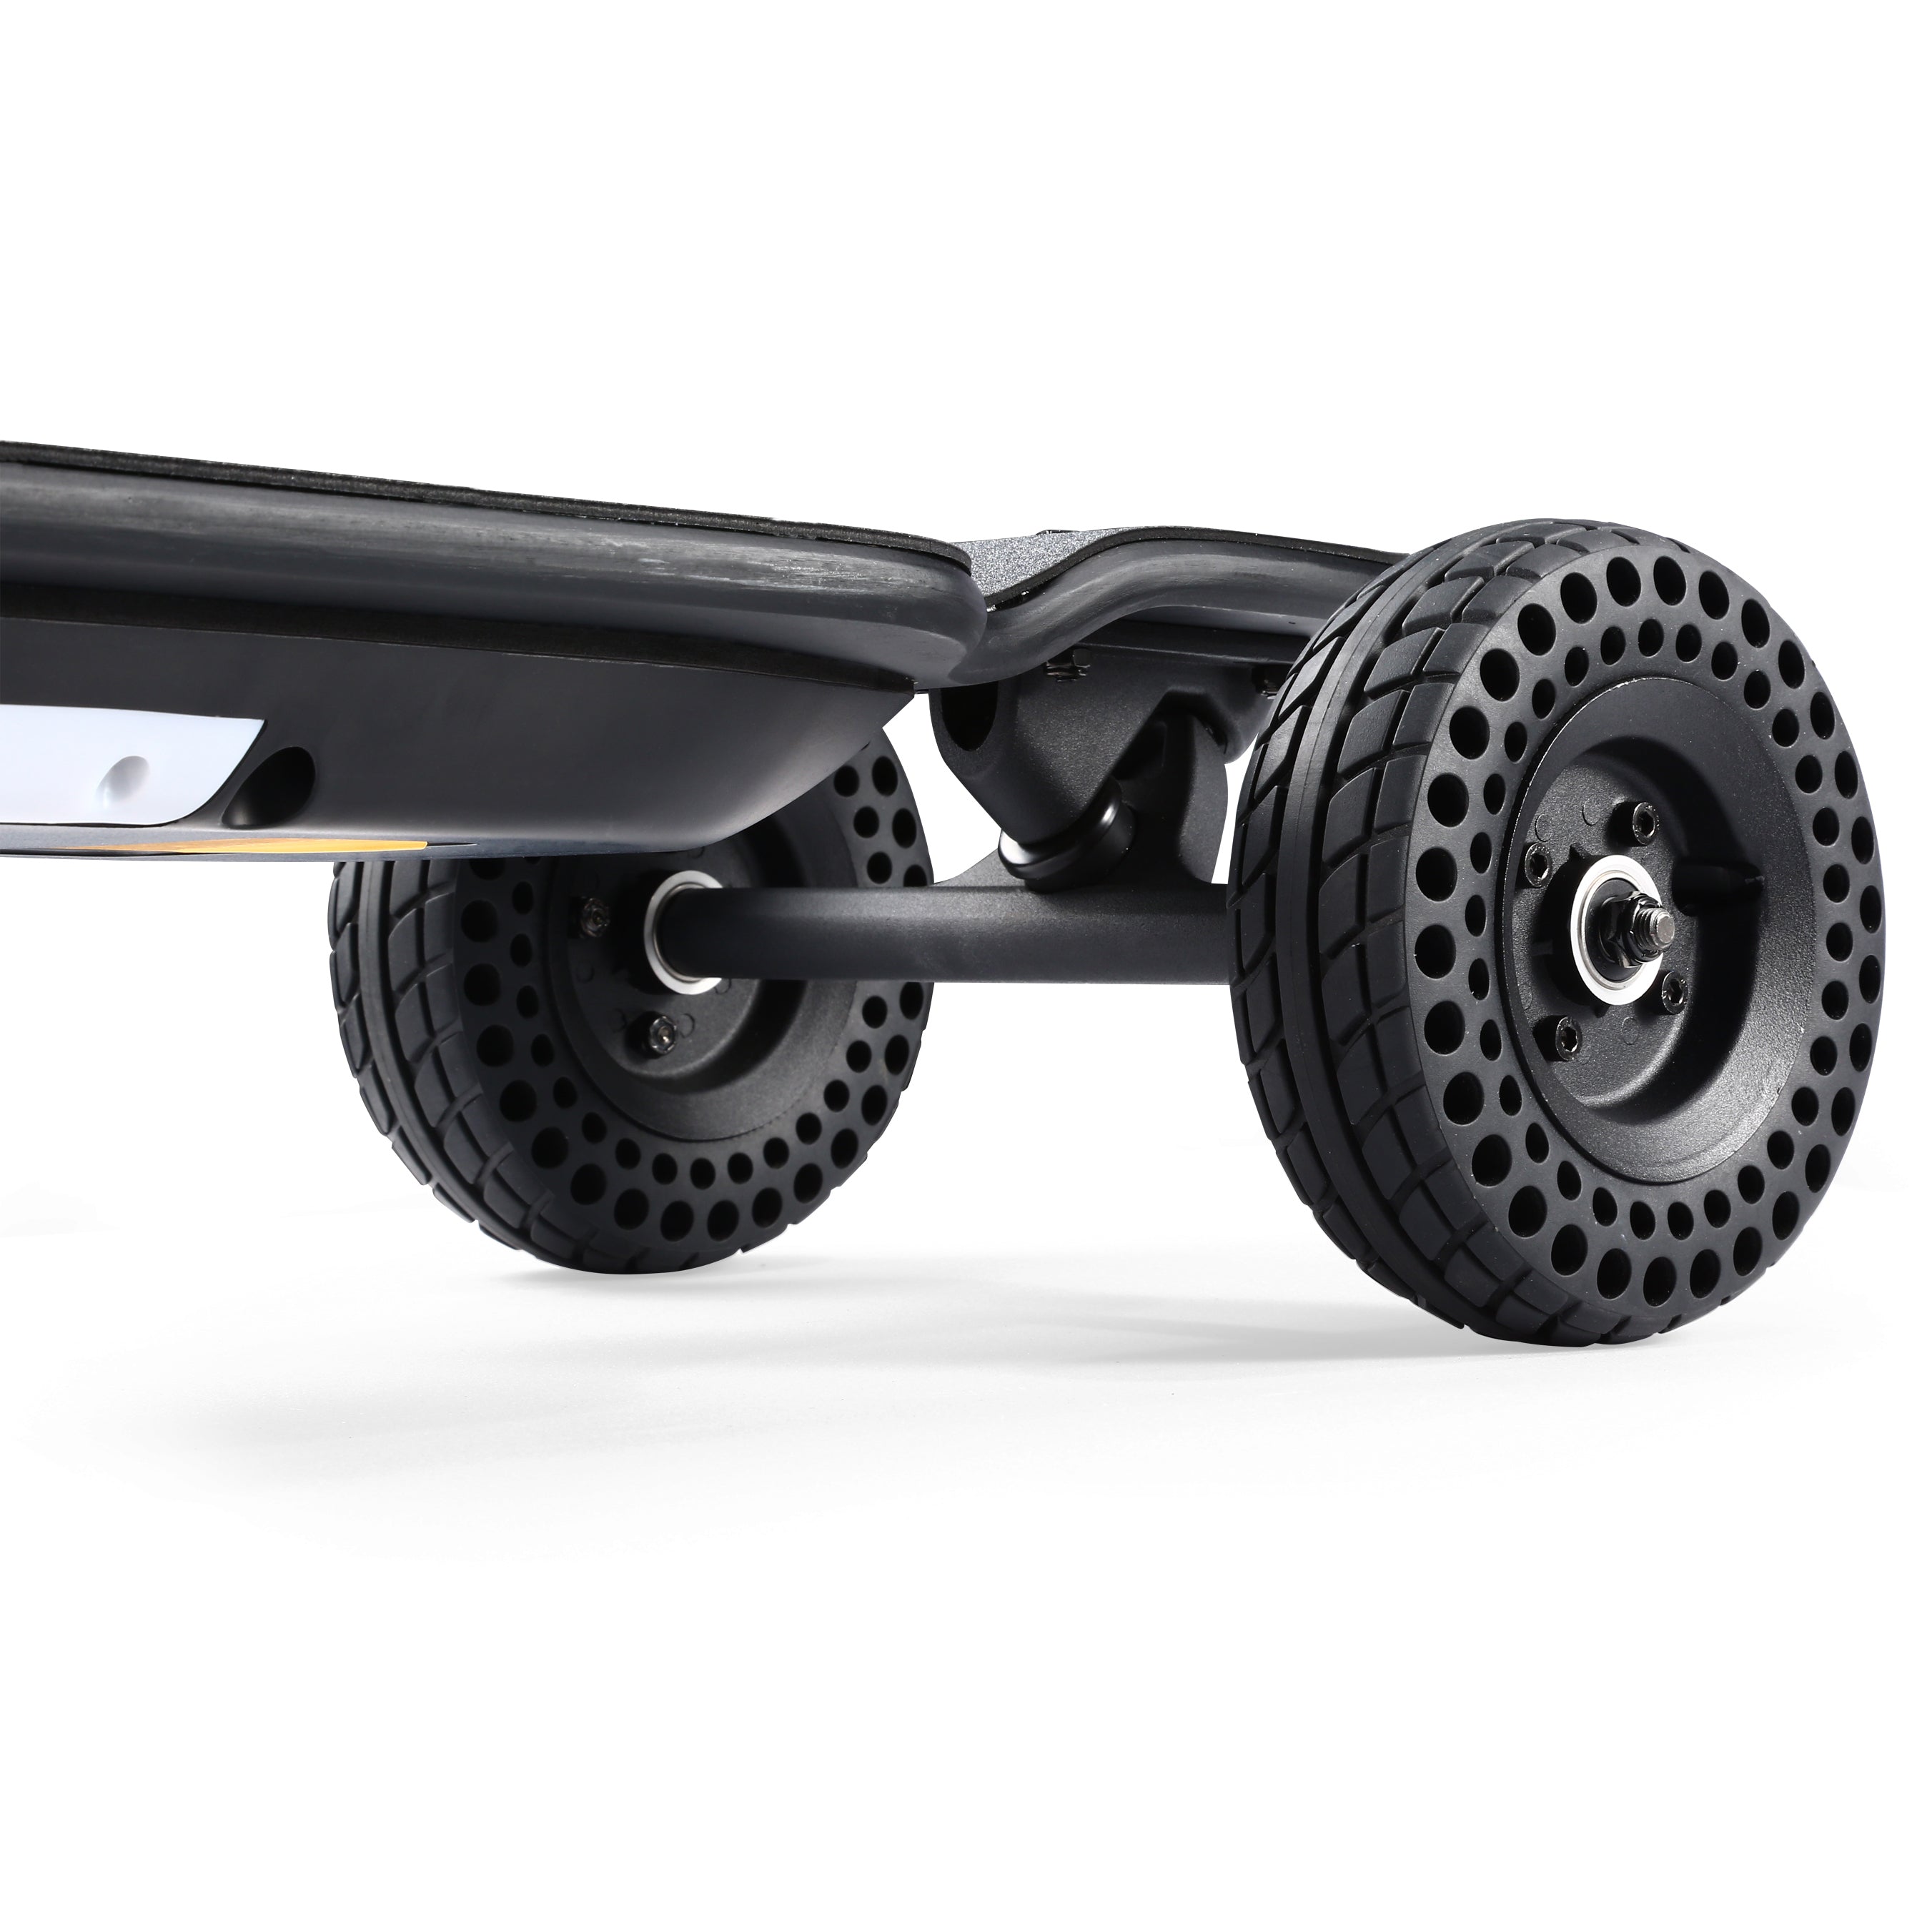 All-terrain Jupiter-01 electric skateboard